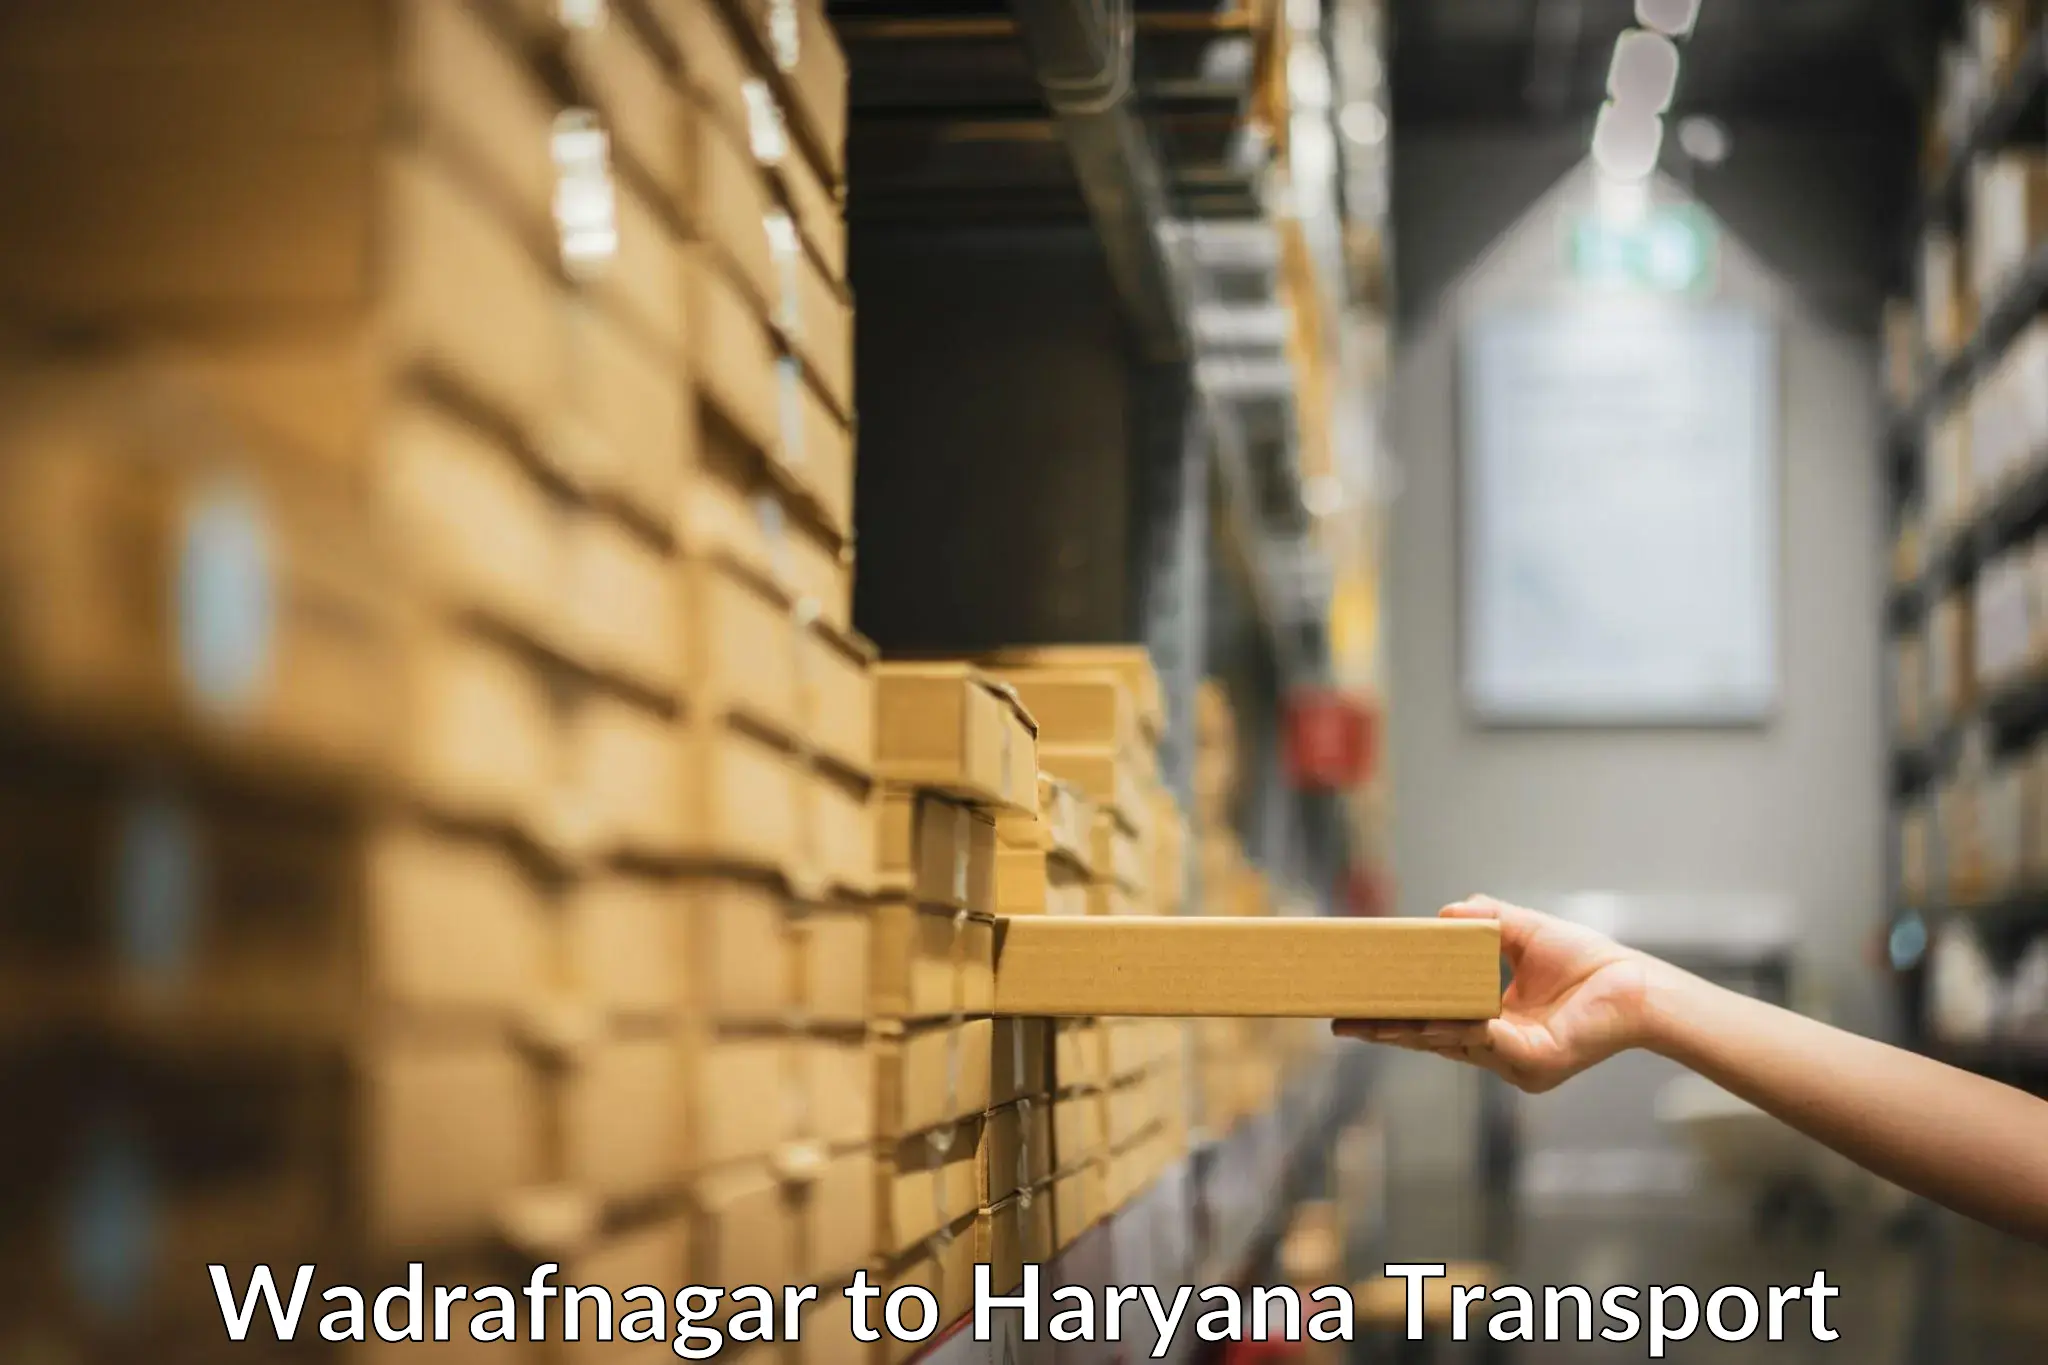 Part load transport service in India Wadrafnagar to Haryana